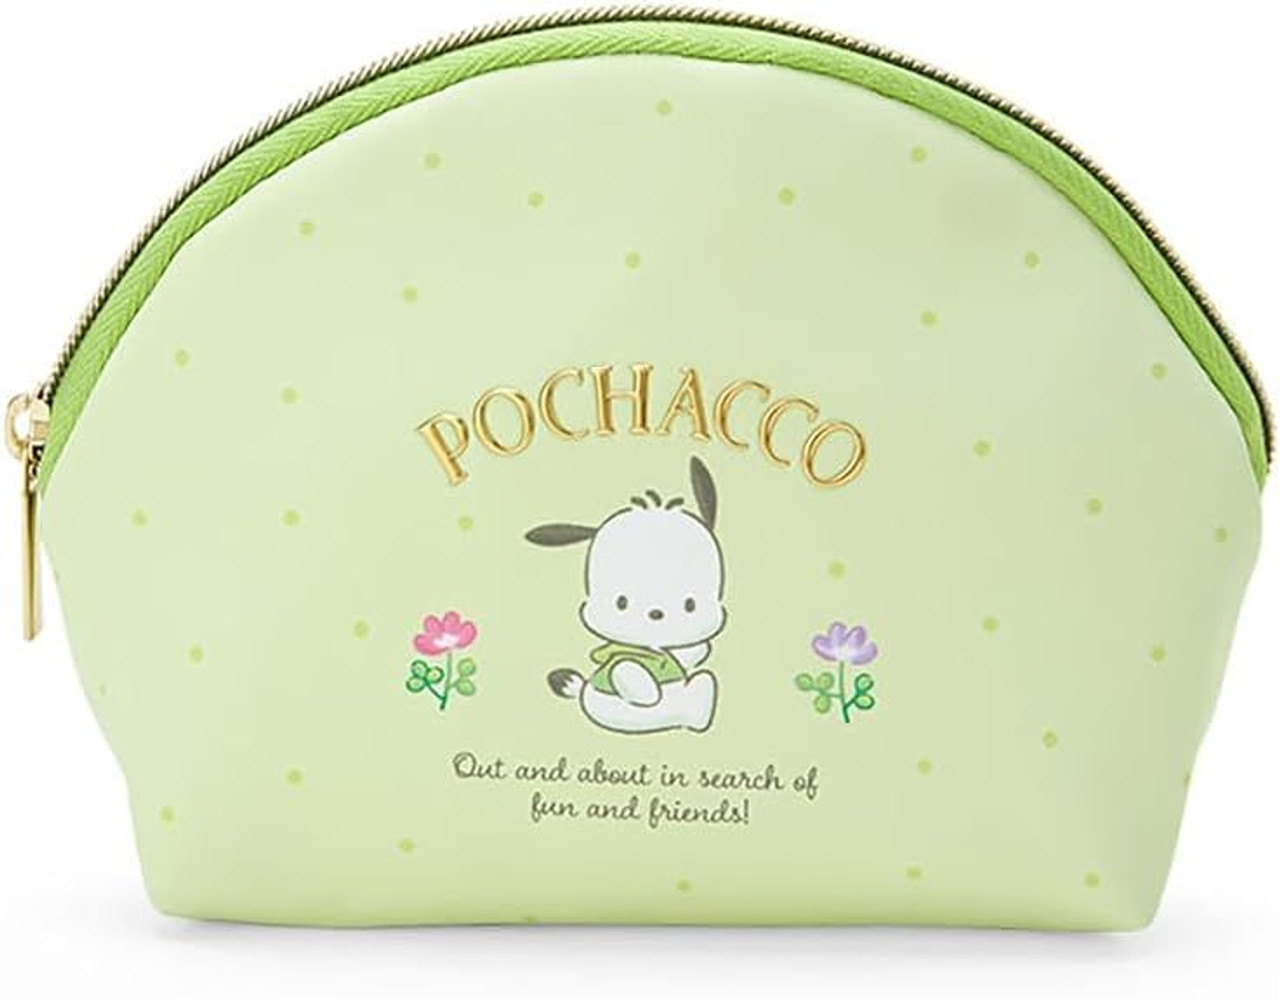 Pochacco Pouch, Cosmetic Bag, Green, Sanrio